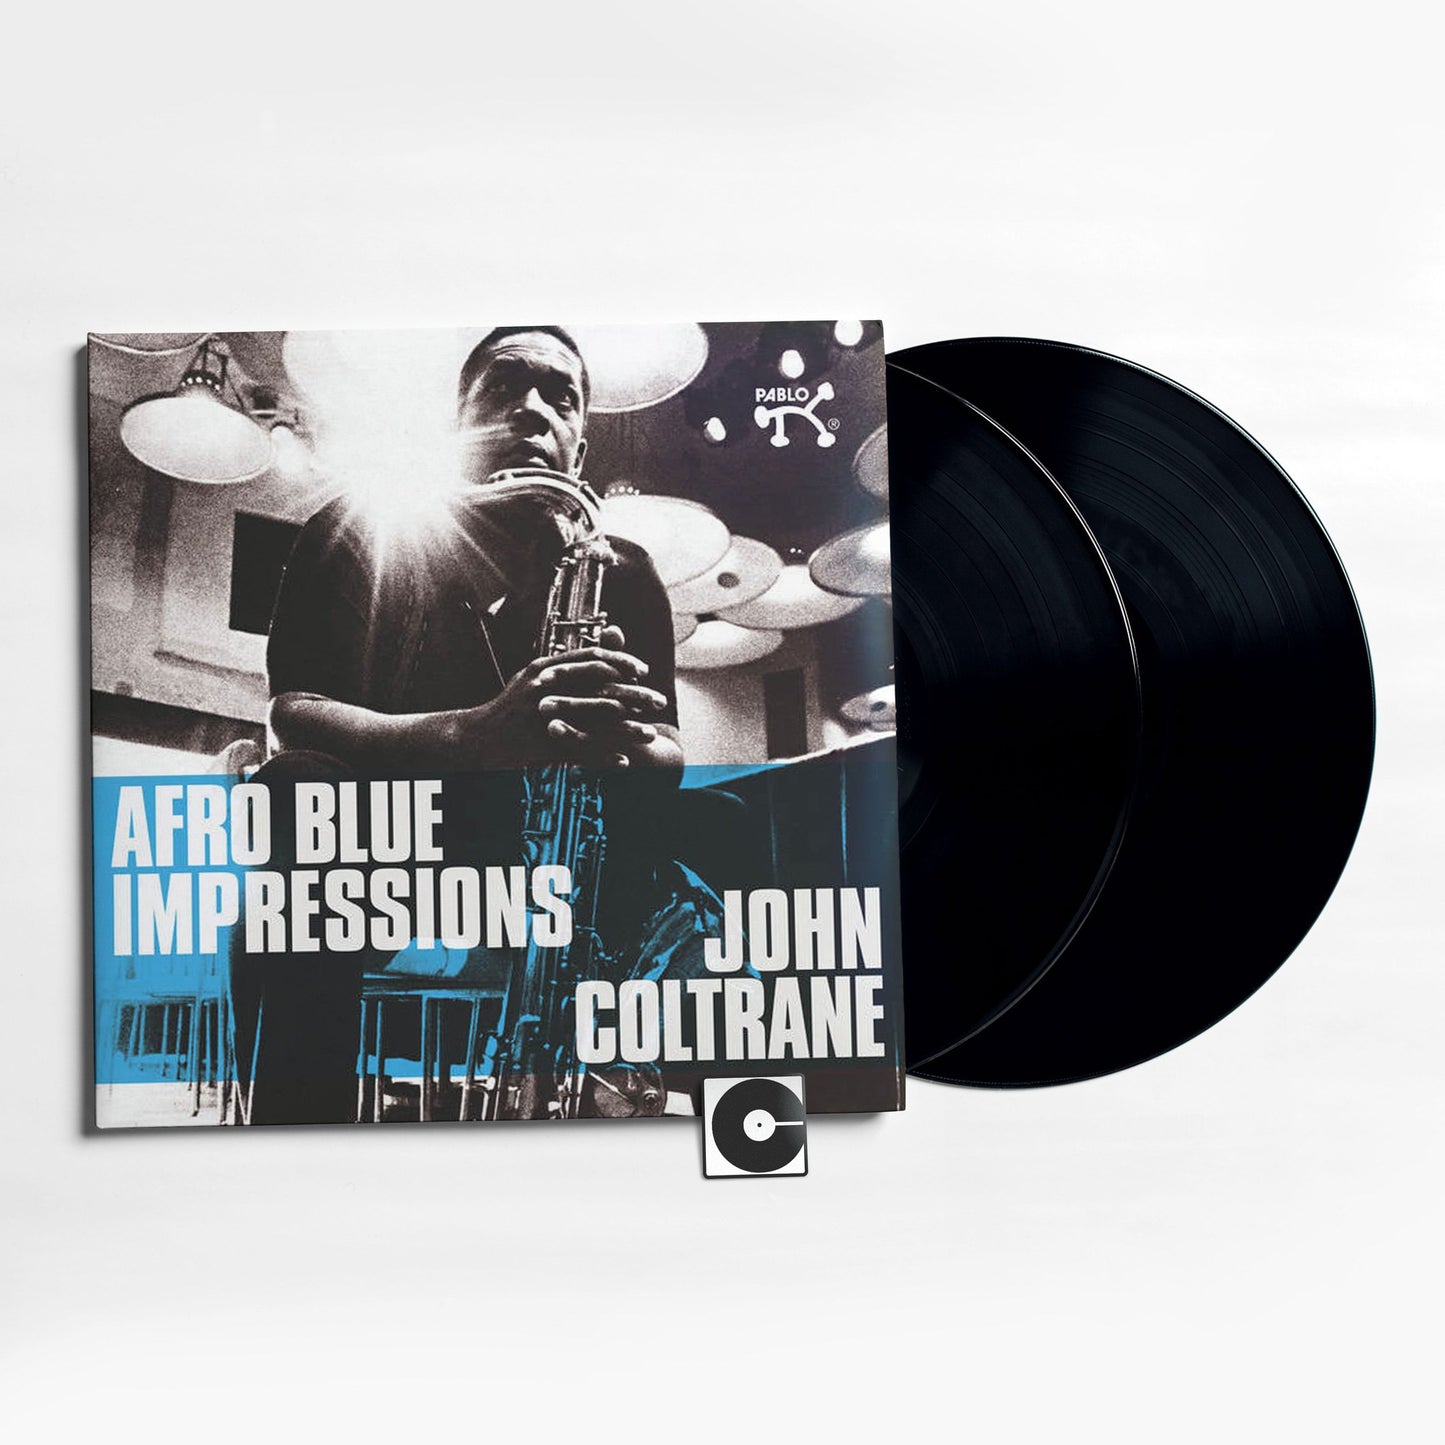 John Coltrane - "Afro Blue Impressions"